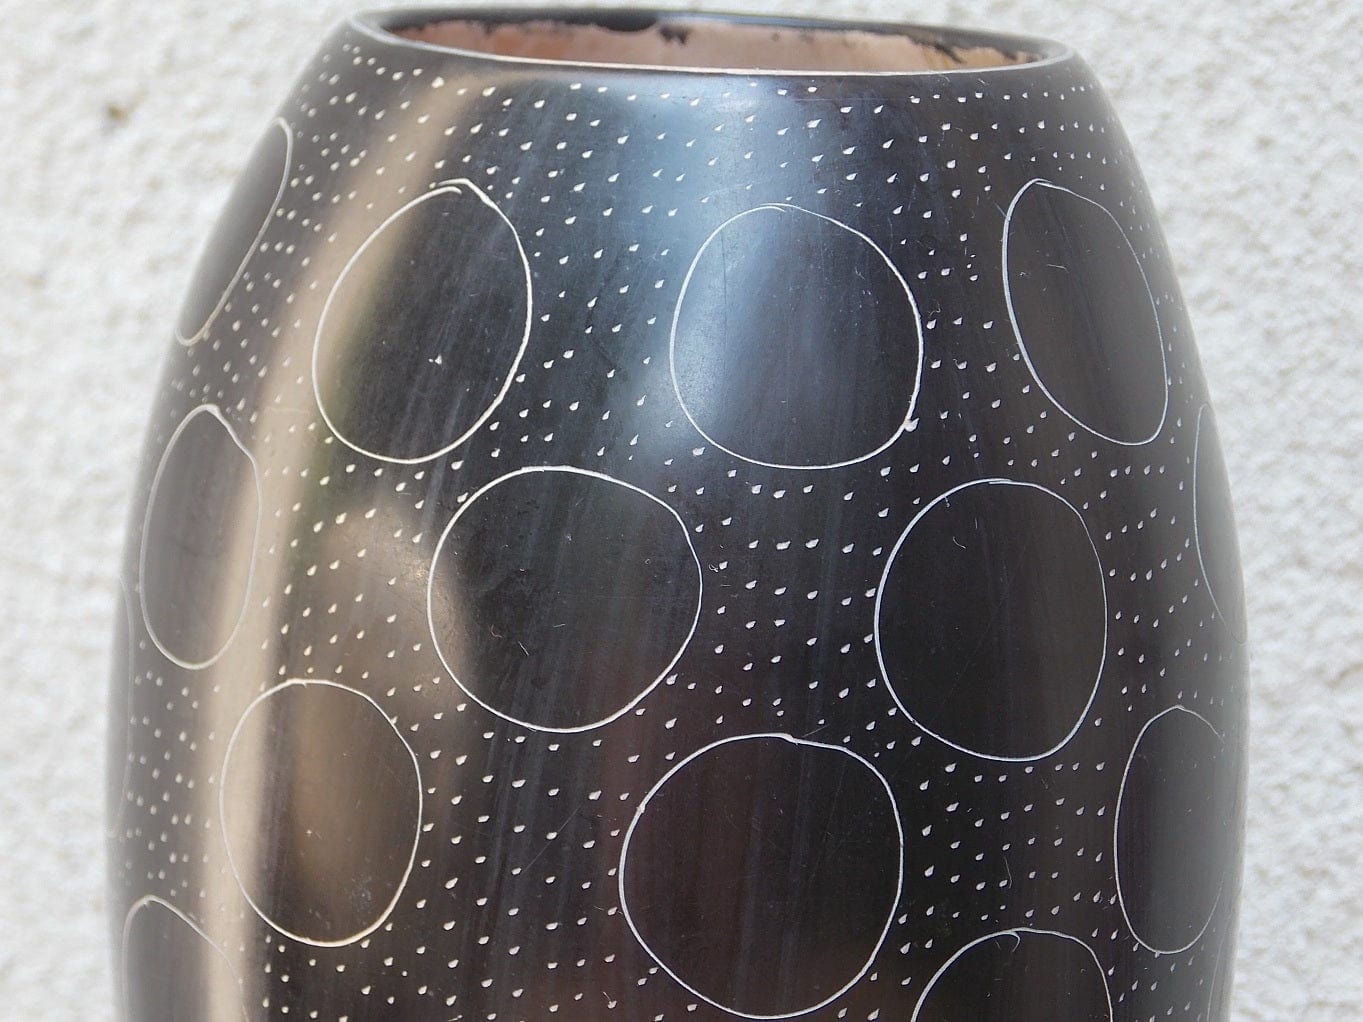 I Like Mike's Mid-Century Modern Wall Decor & Art Medium Modern Black Clay Pottery Vase with Circles